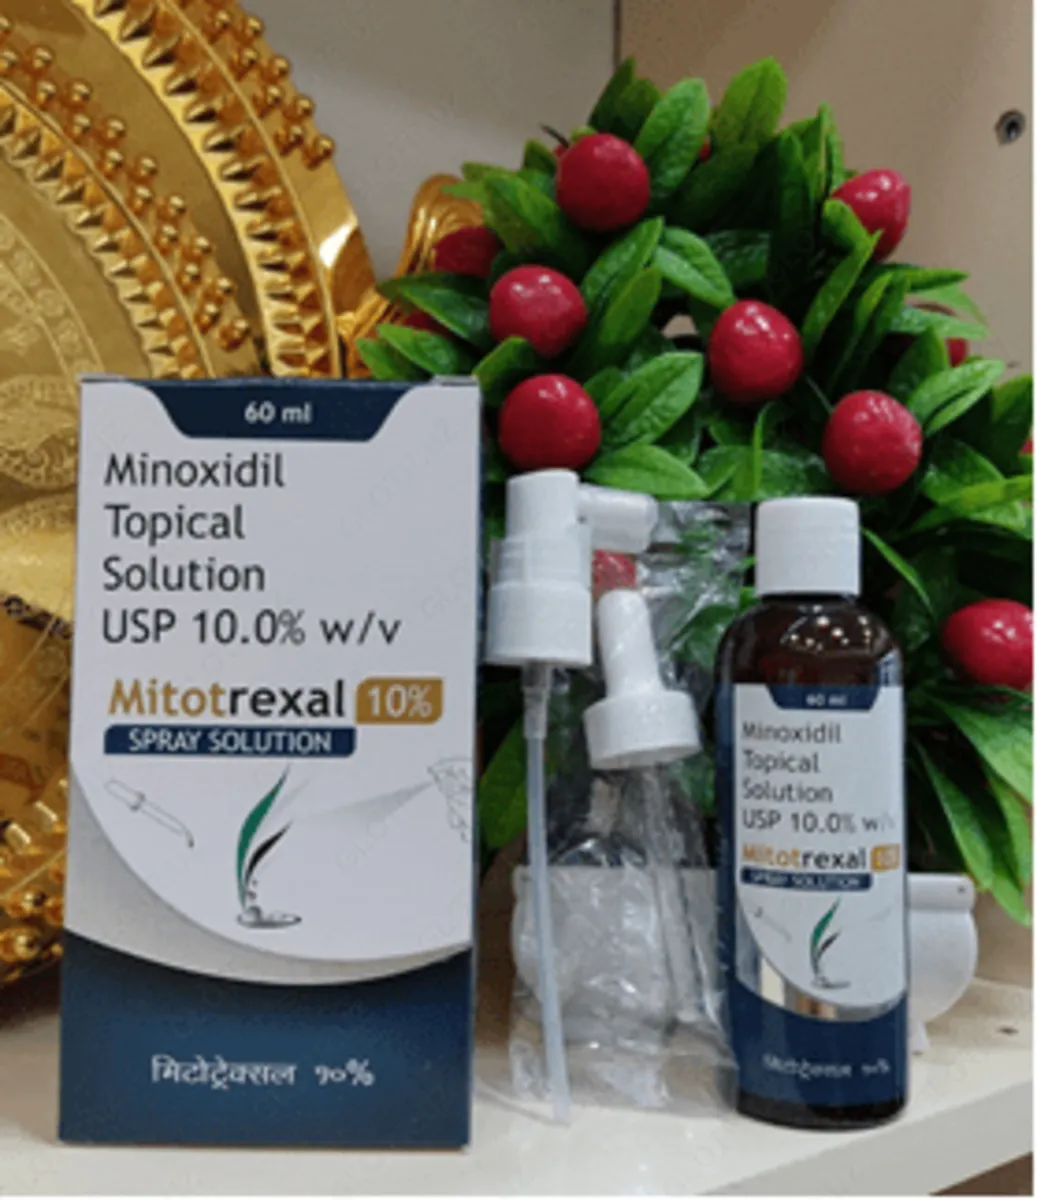 Minoxidil (Minoxytop) 10% - Препарат против облысения#1